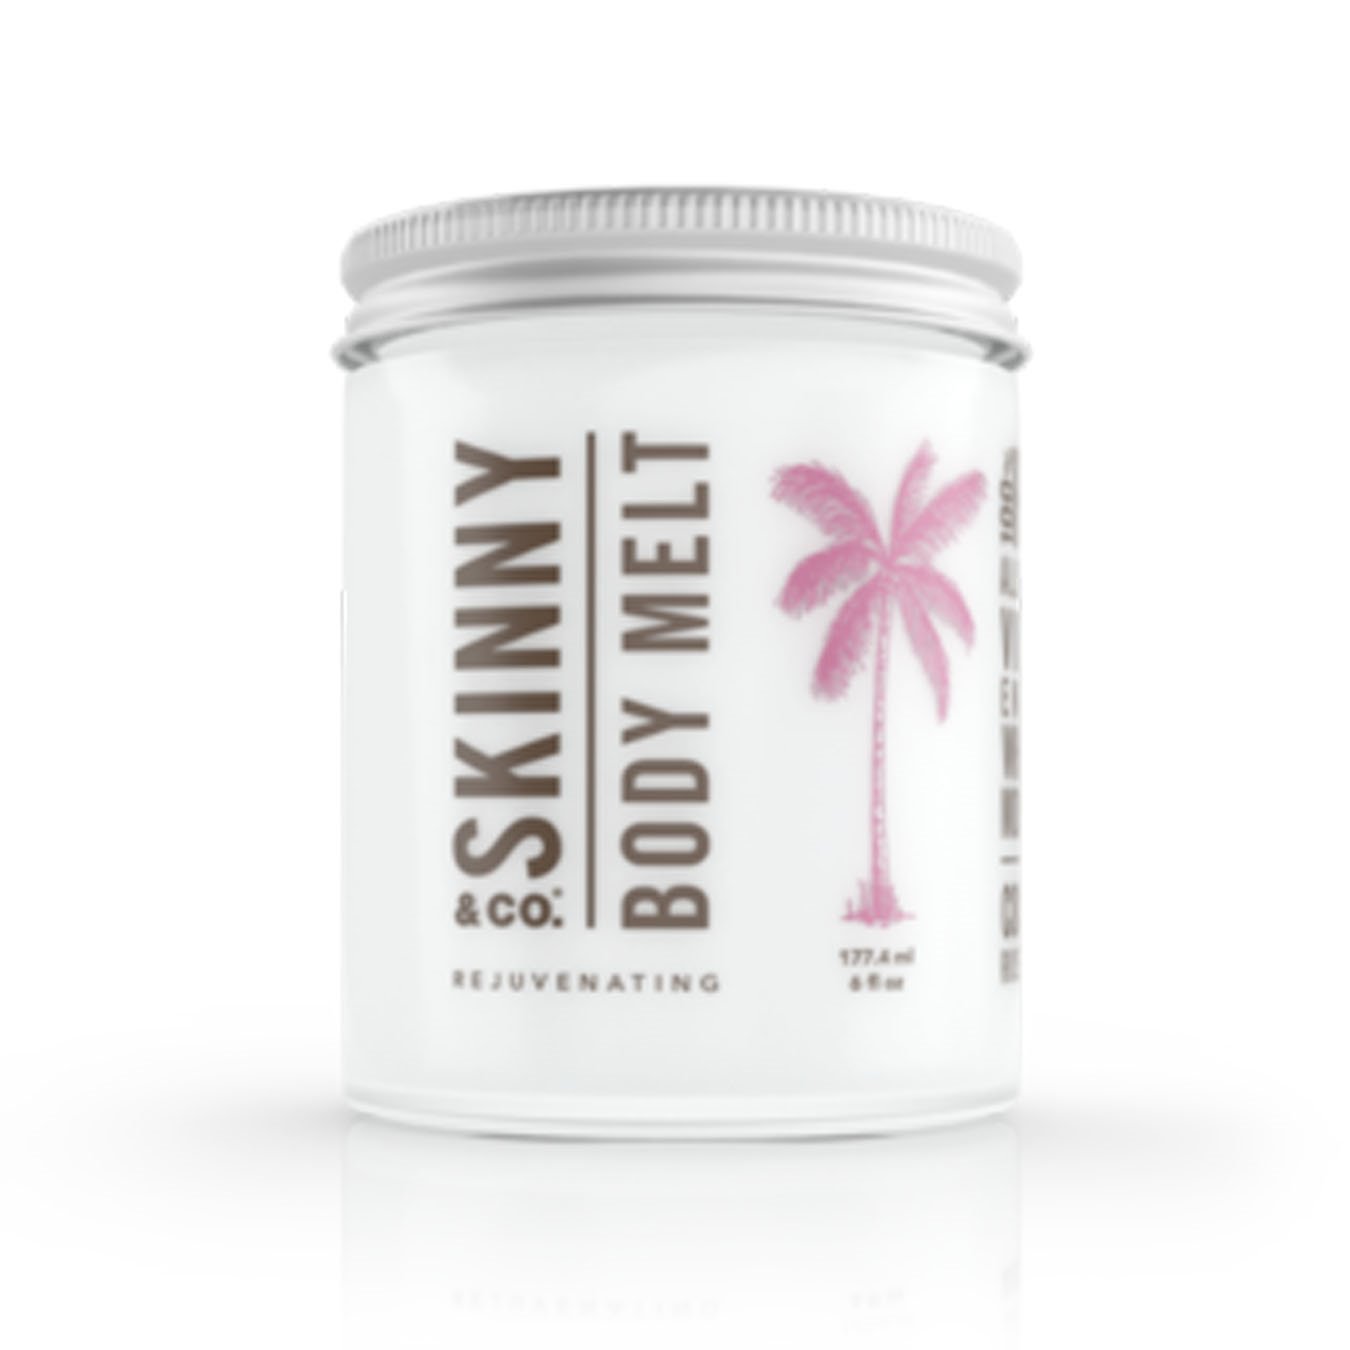 Skinny & Co. Rose & Jojoba Rejuvenating Body Melt (6 oz.)